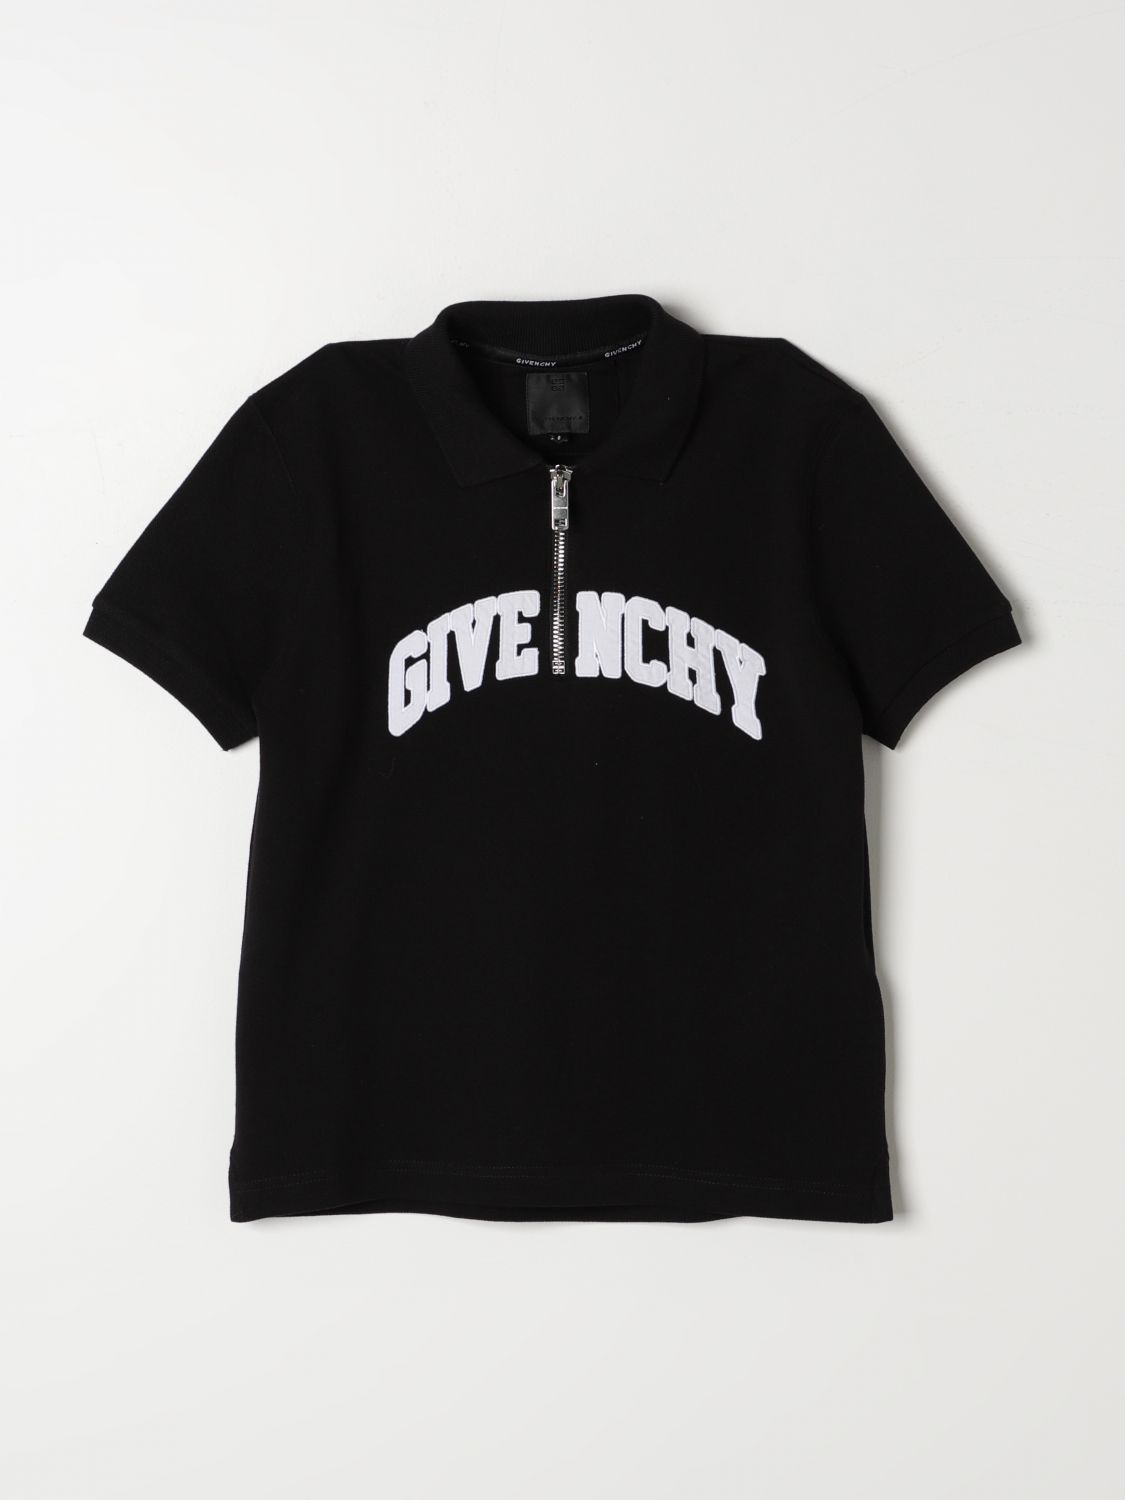 Givenchy Polo Shirt  Kids Color Black